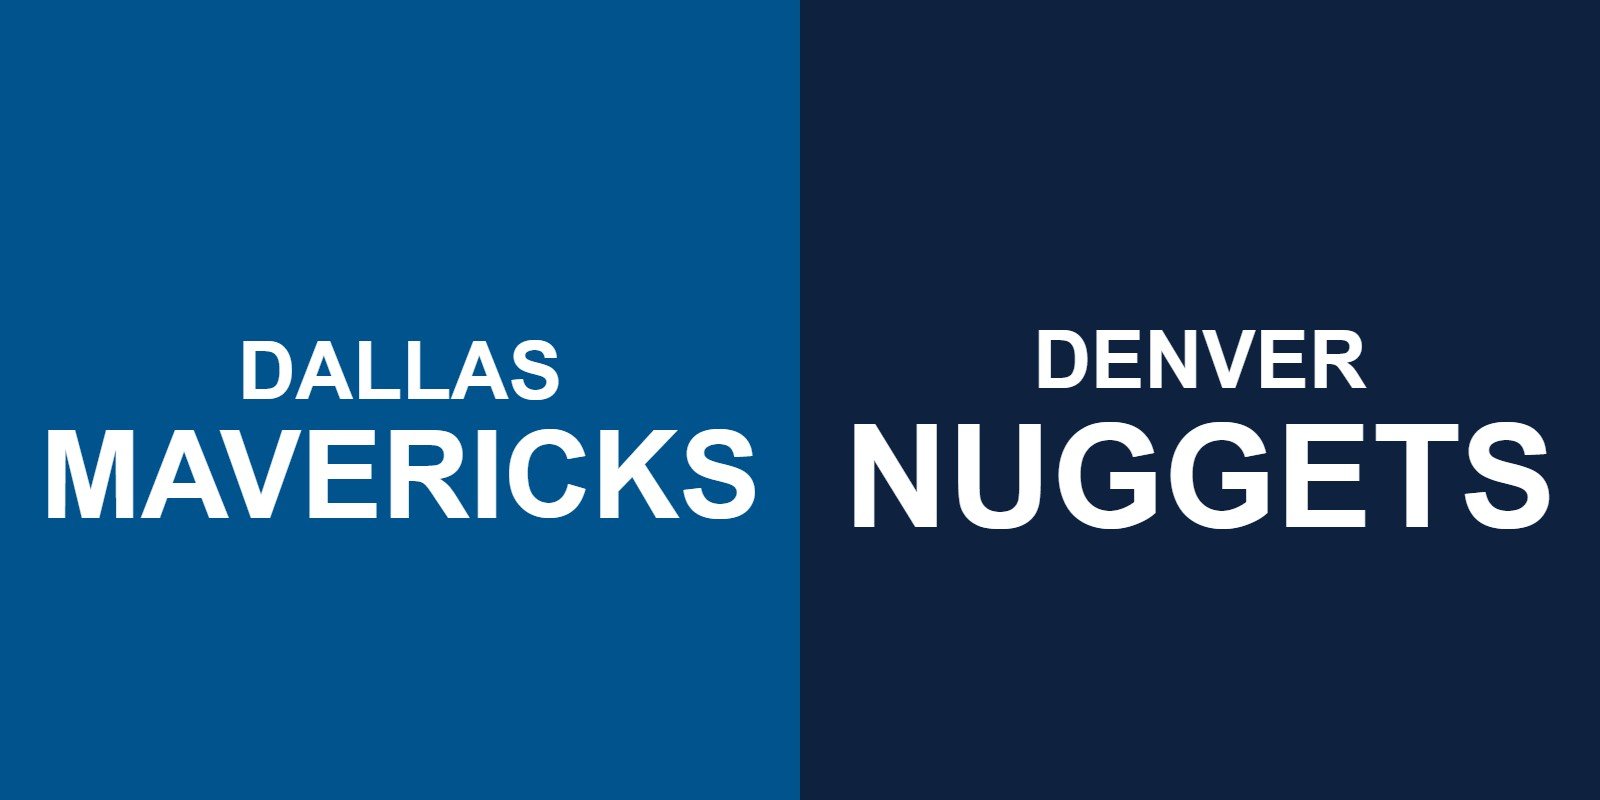 Mavericks vs Nuggets